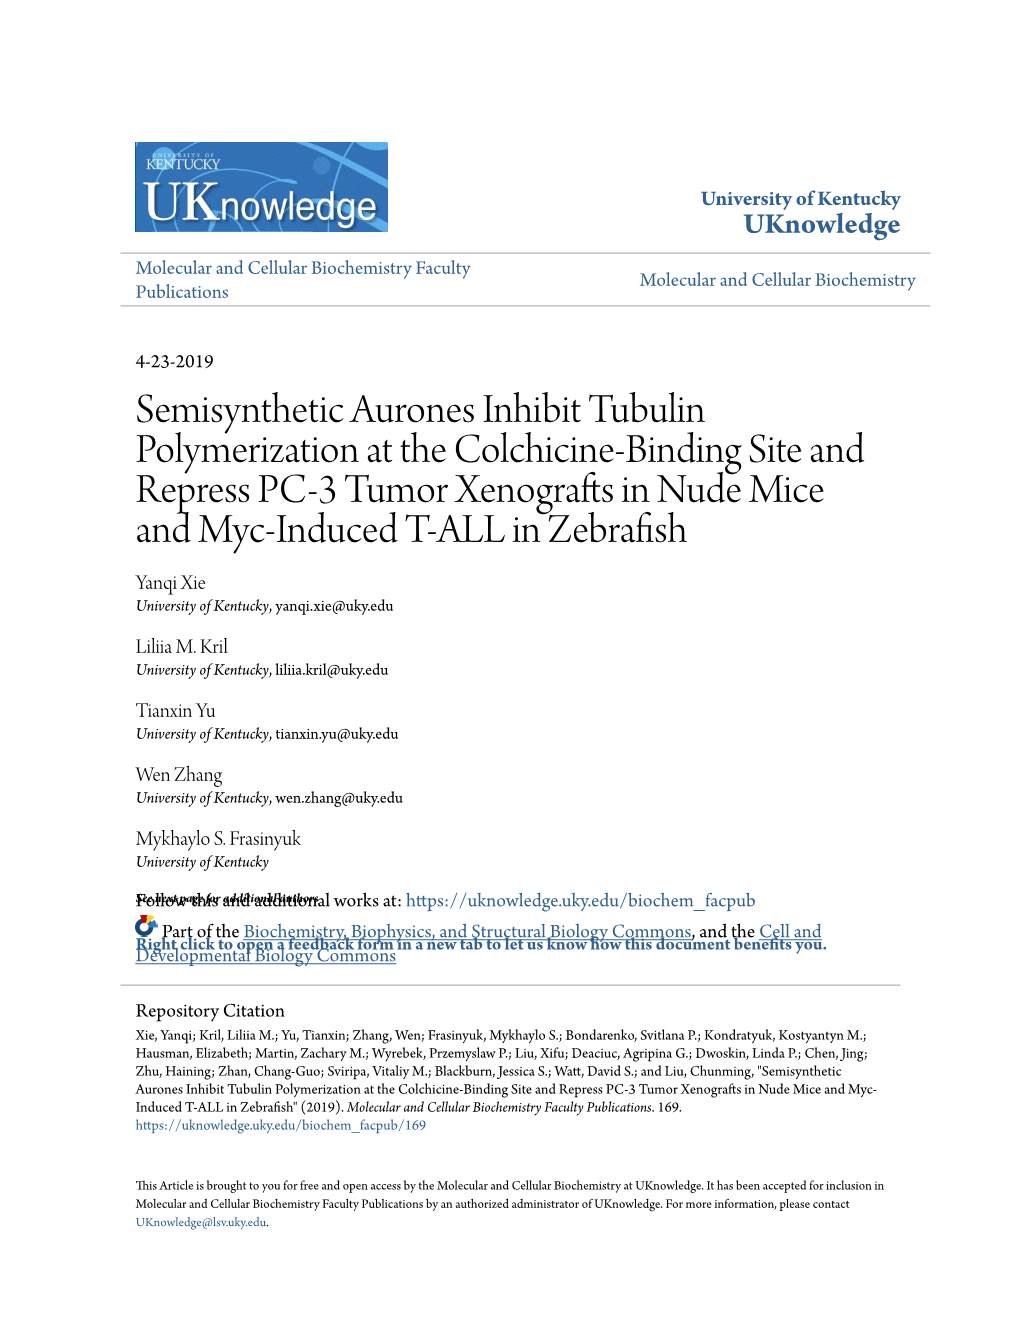 Semisynthetic Aurones Inhibit Tubulin Polymerization at the Colchicine